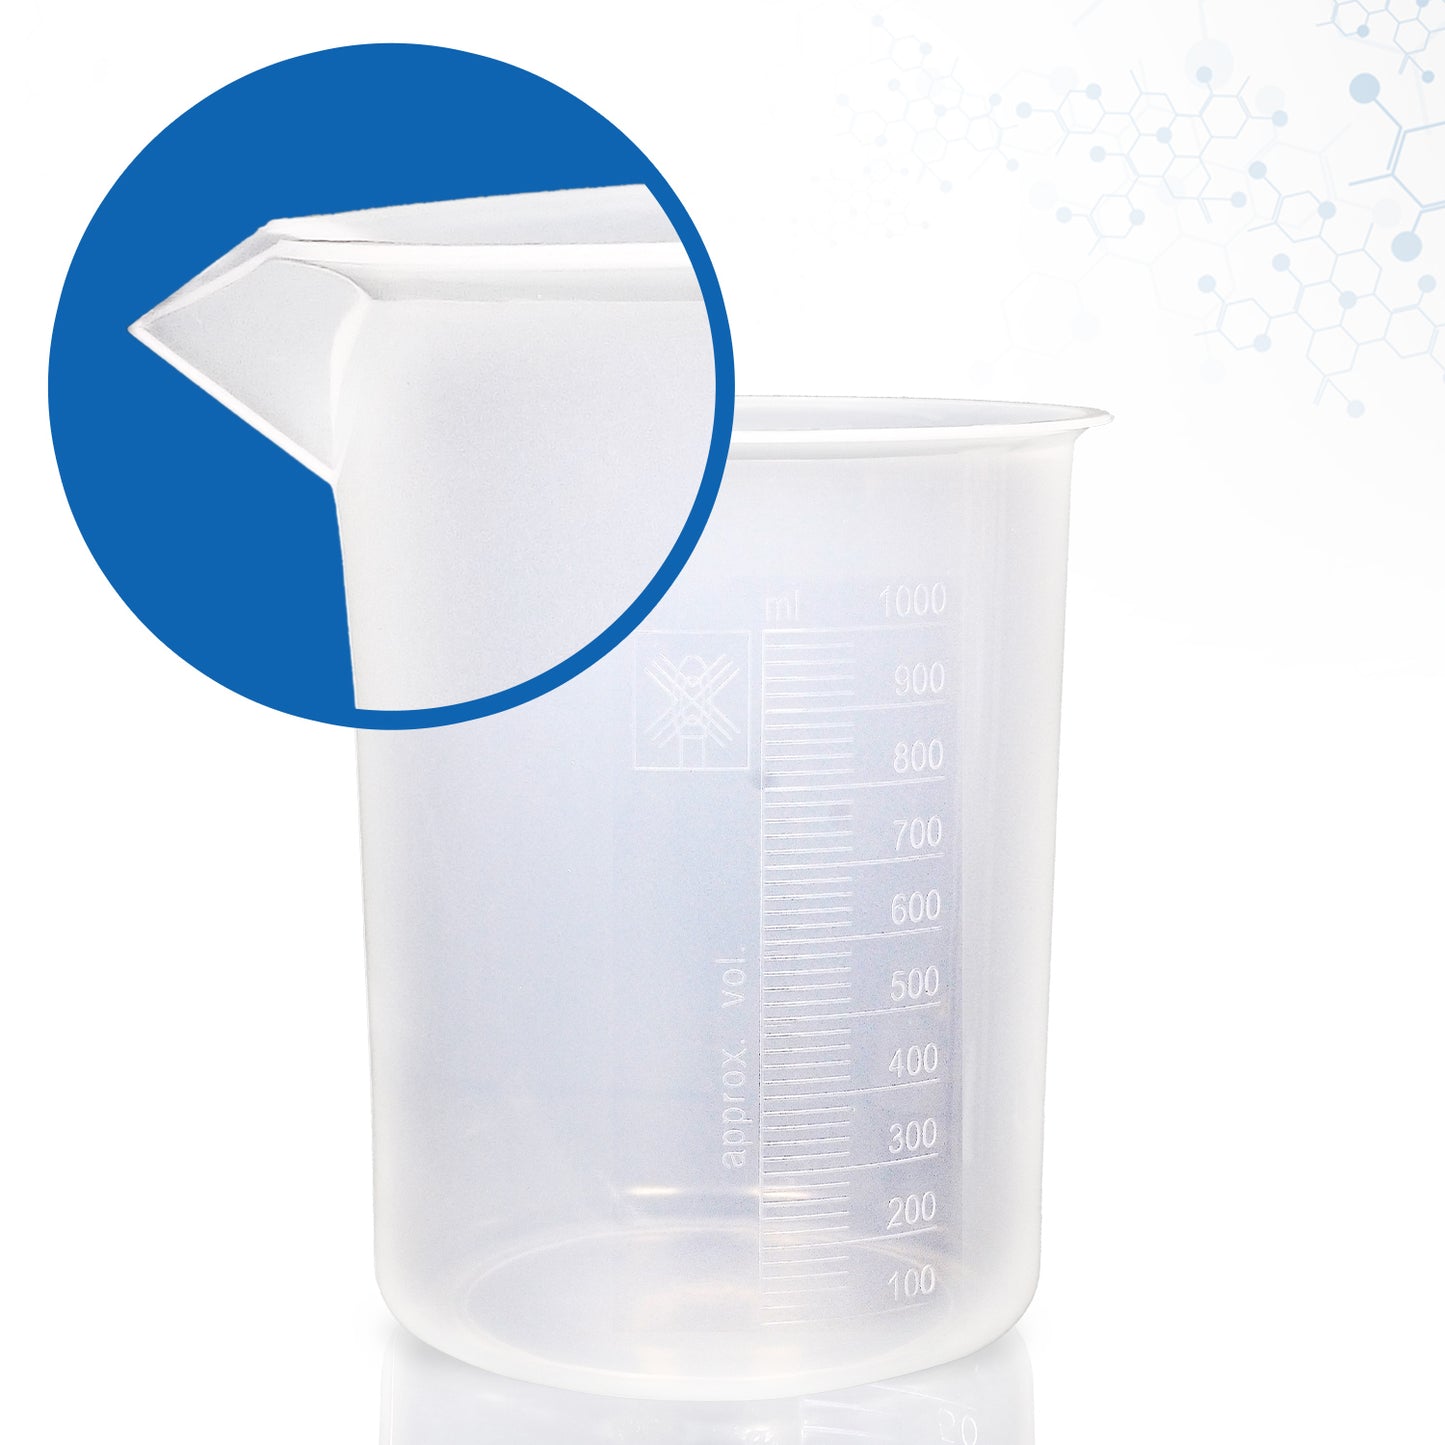 Supertek Premium Polypropylene Beaker Set | 1000ml Capacity - Pack of 6 Beakers for Laboratory, Science Experiments